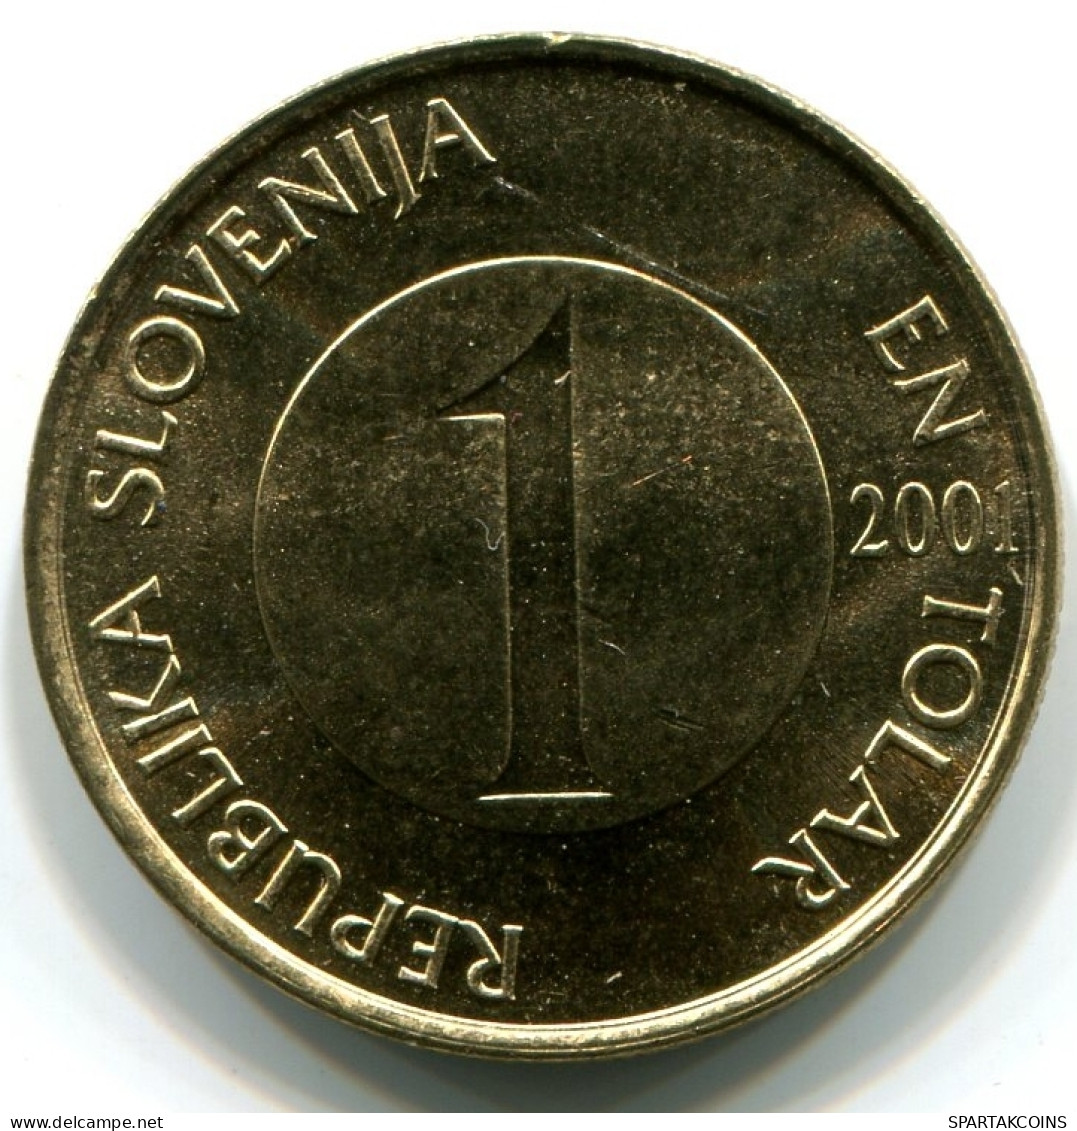 1 TOLAR 2001 SLOVENIA UNC Fish Coin #W11302.U - Slowenien